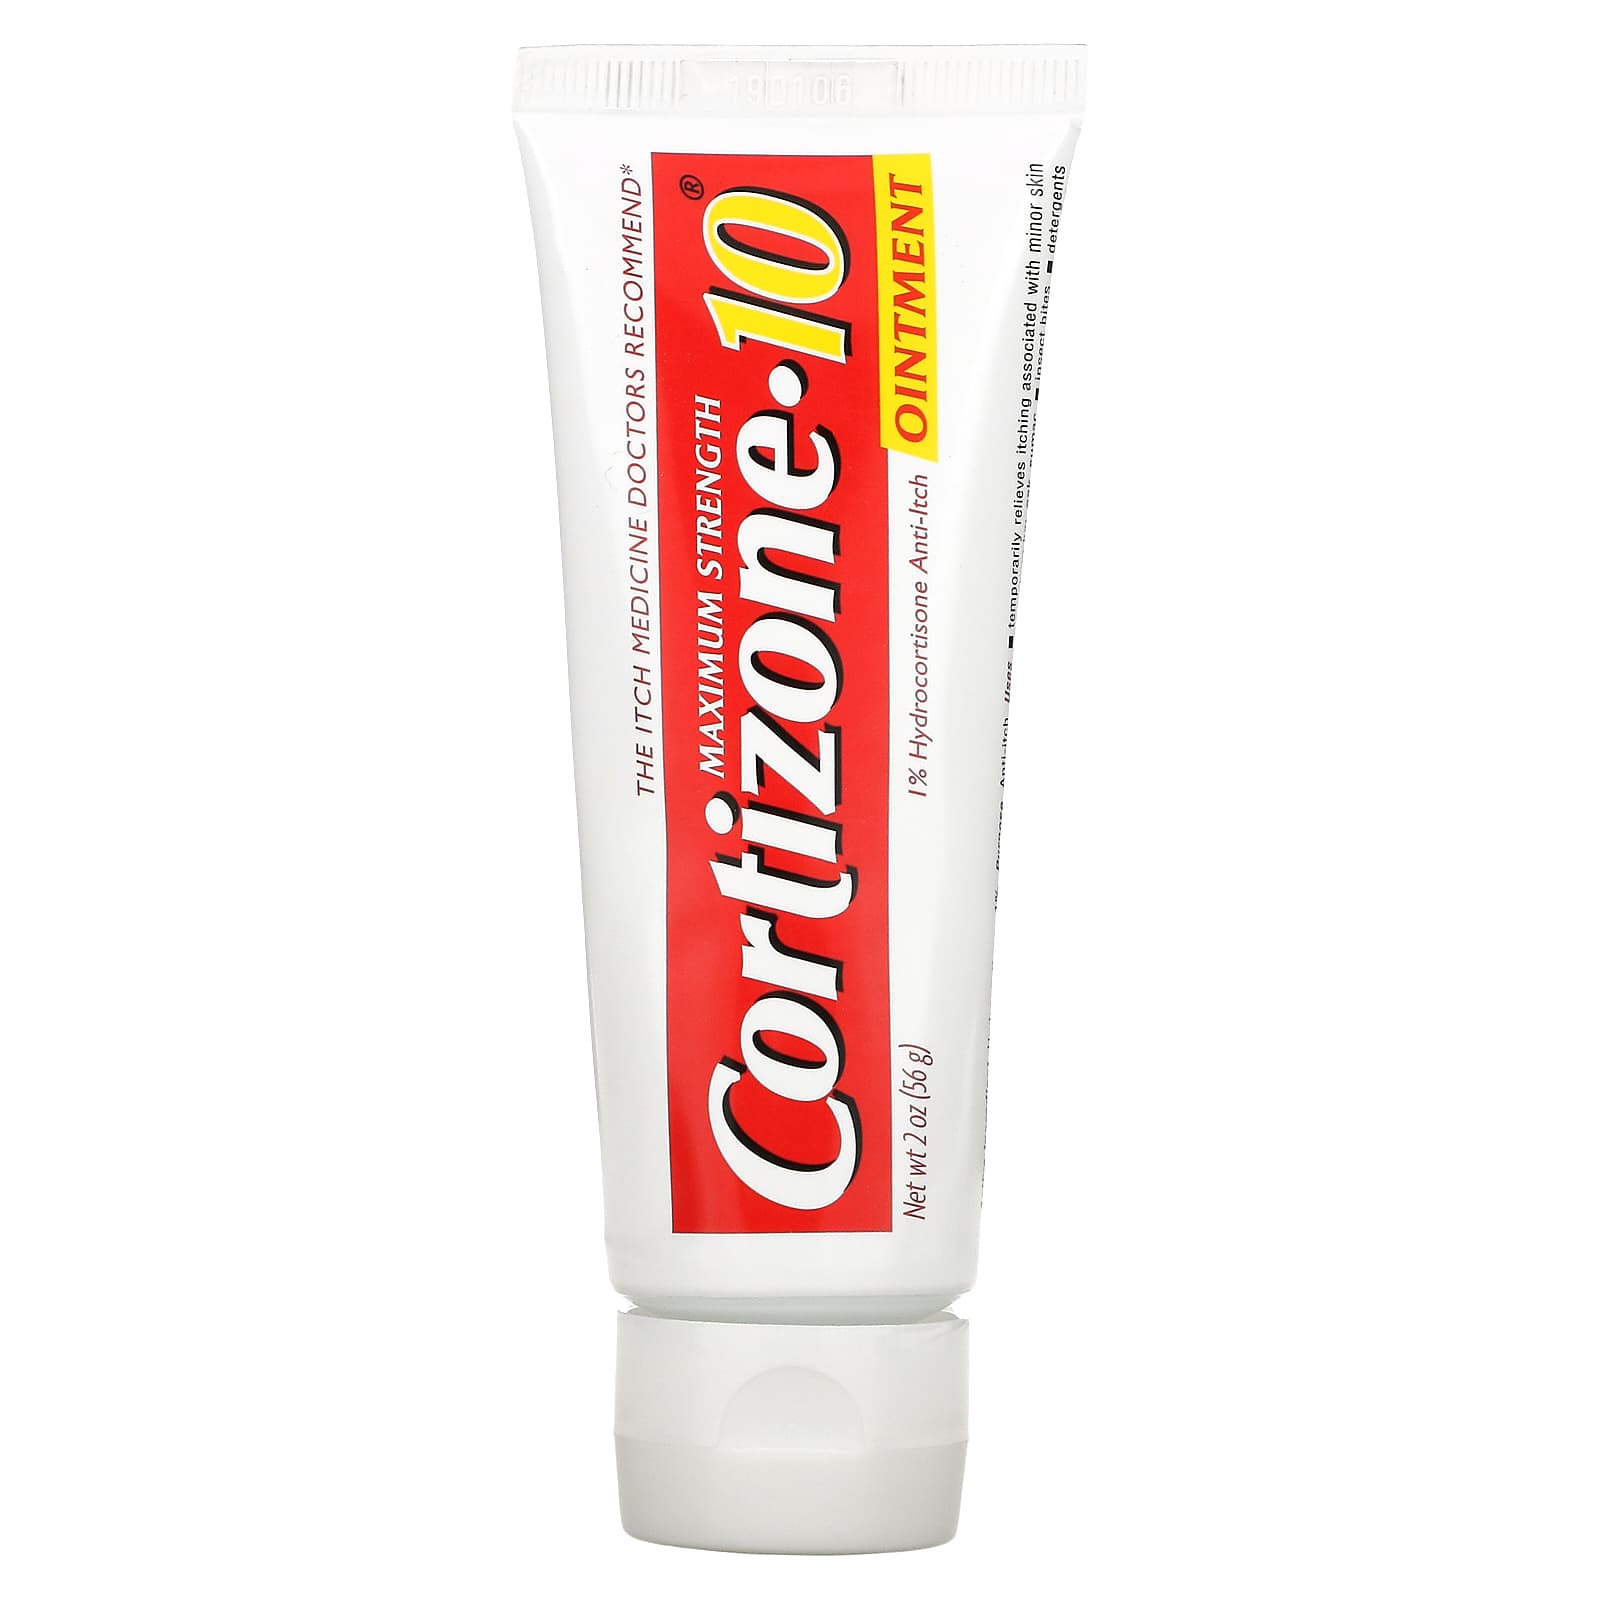 Cortizone 10 1 Hydrocortisone Anti Itch Ointment Water Resistant Maximum Strength 2 Oz 56 G